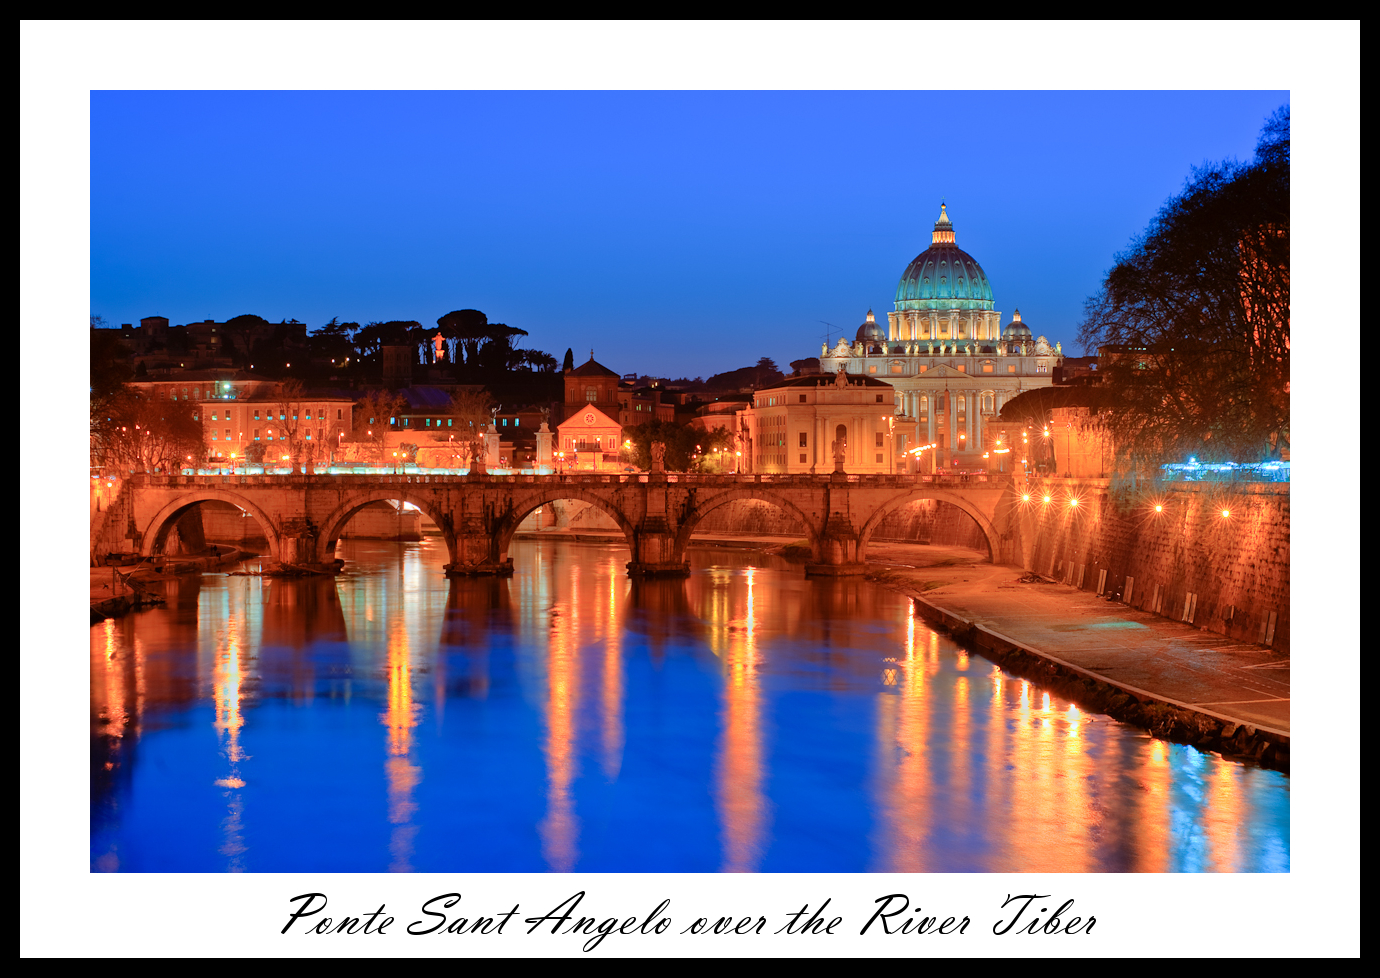 Ponte Sant Angelo over the River Tiber